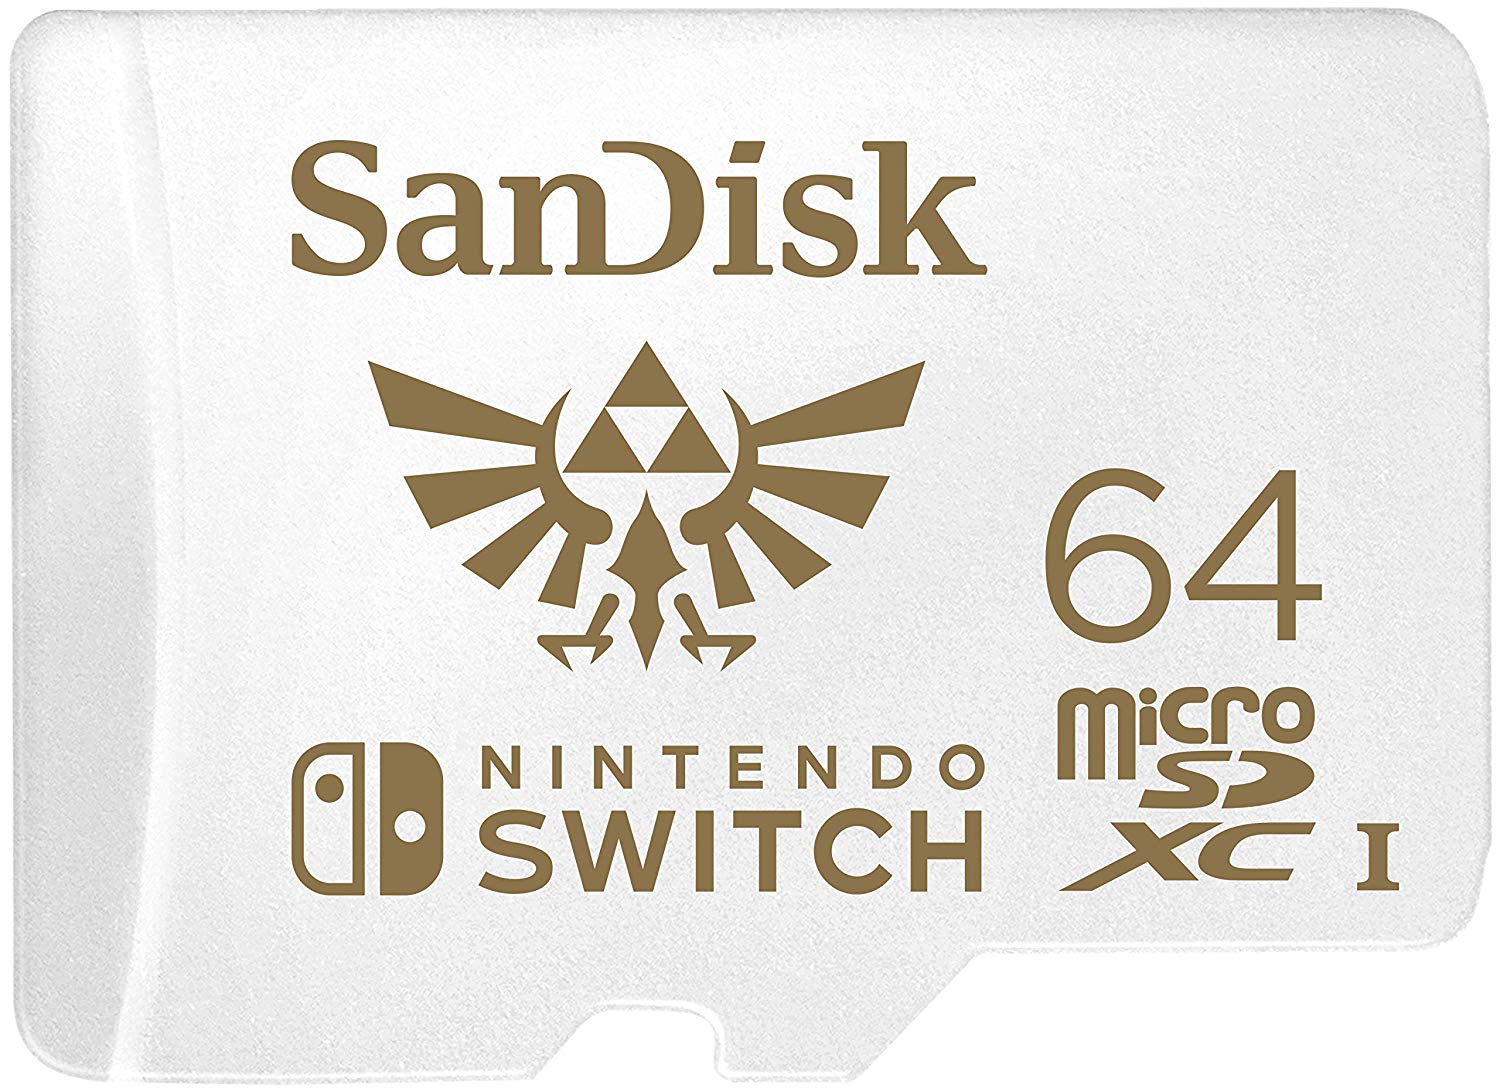 SanDisk 64GB microSD card